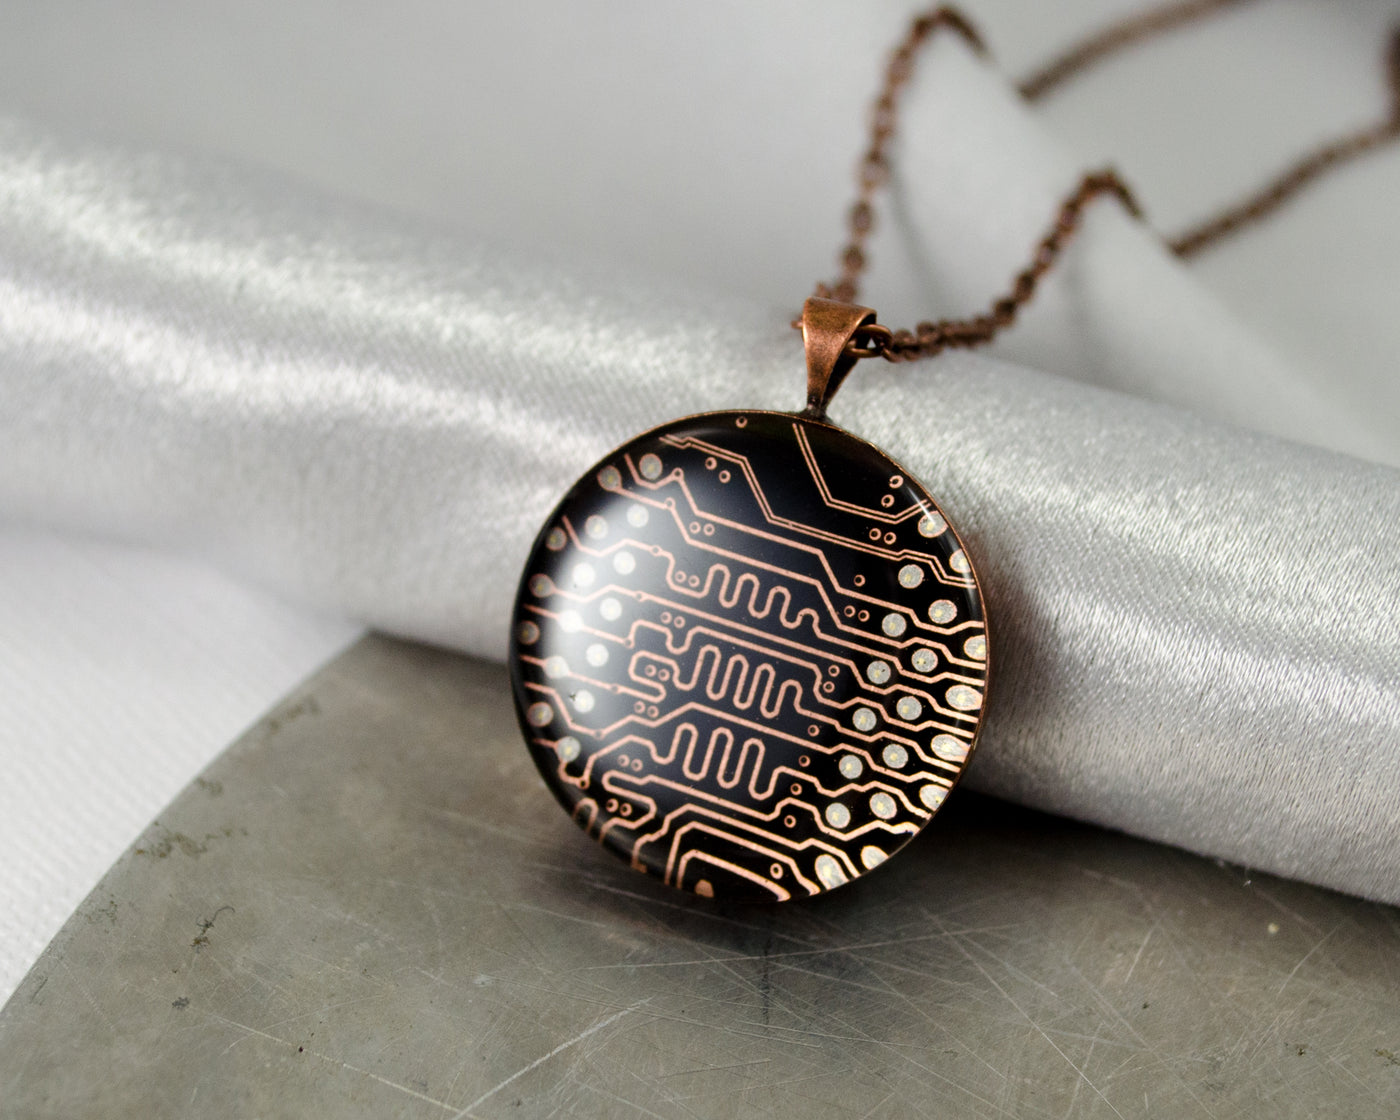 Copper Circuit Board Necklace - Medium Size